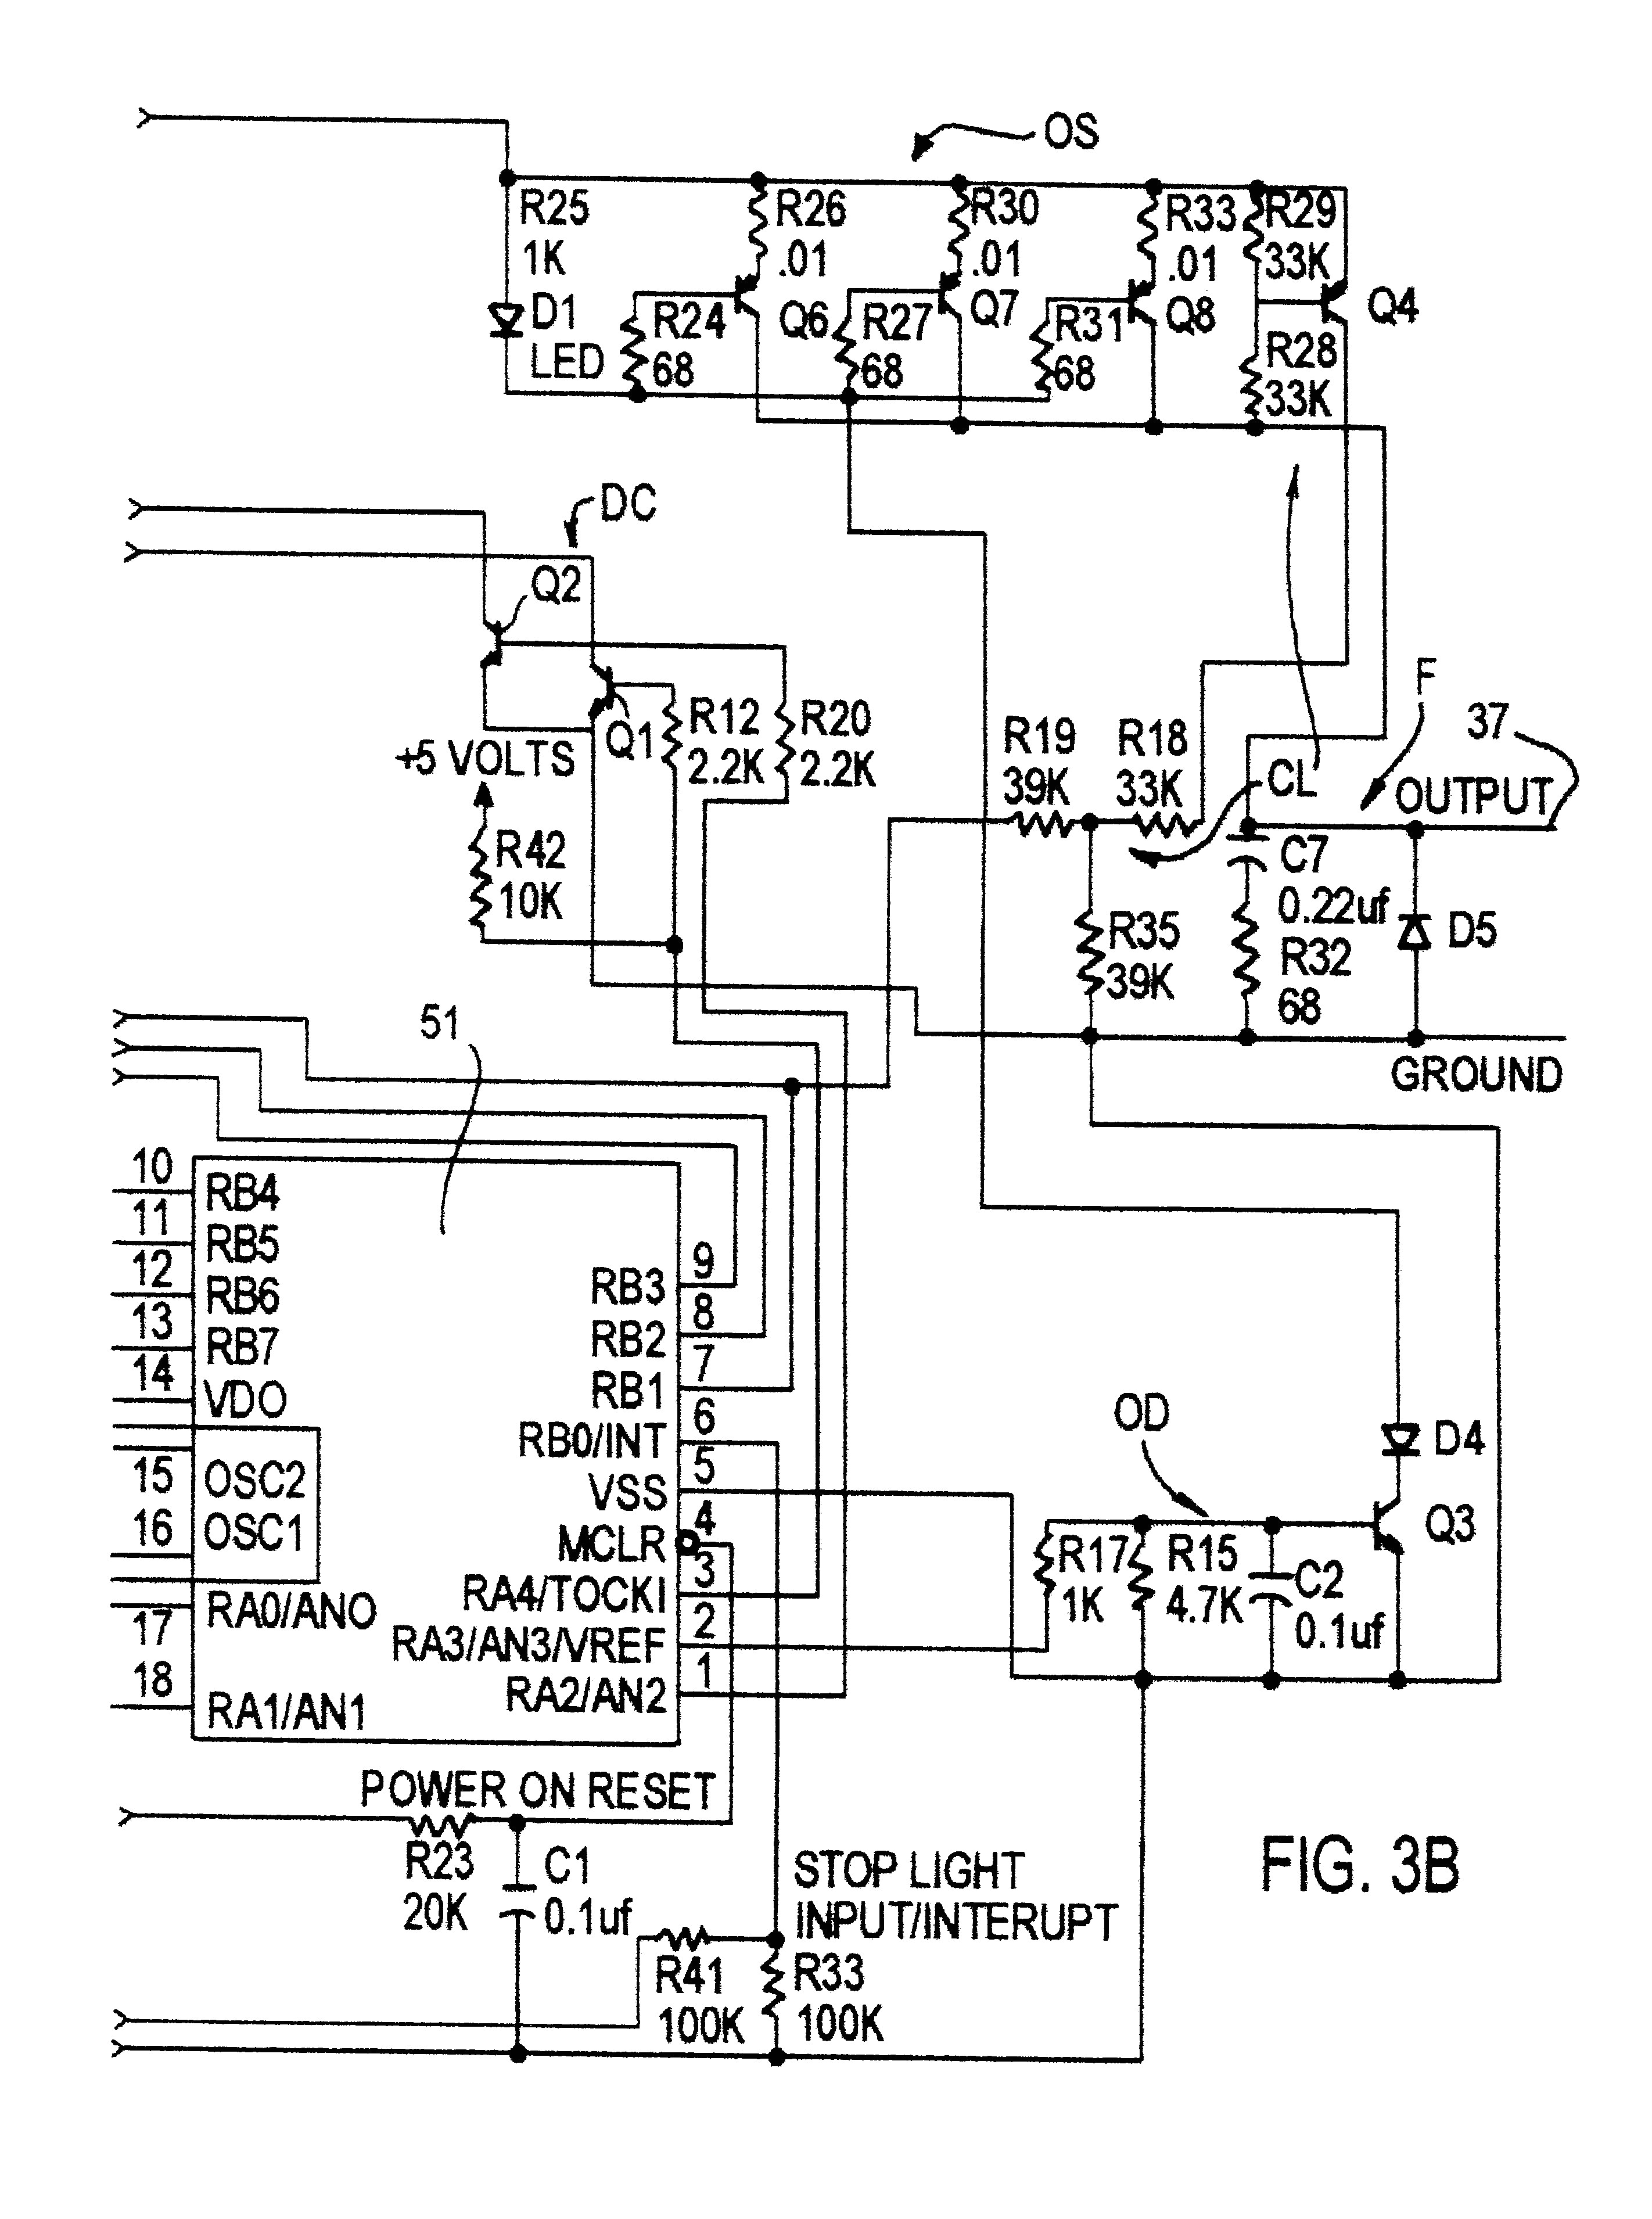 5410 john deere electrical diagram wiring diagram database john deere m665 wiring diagram